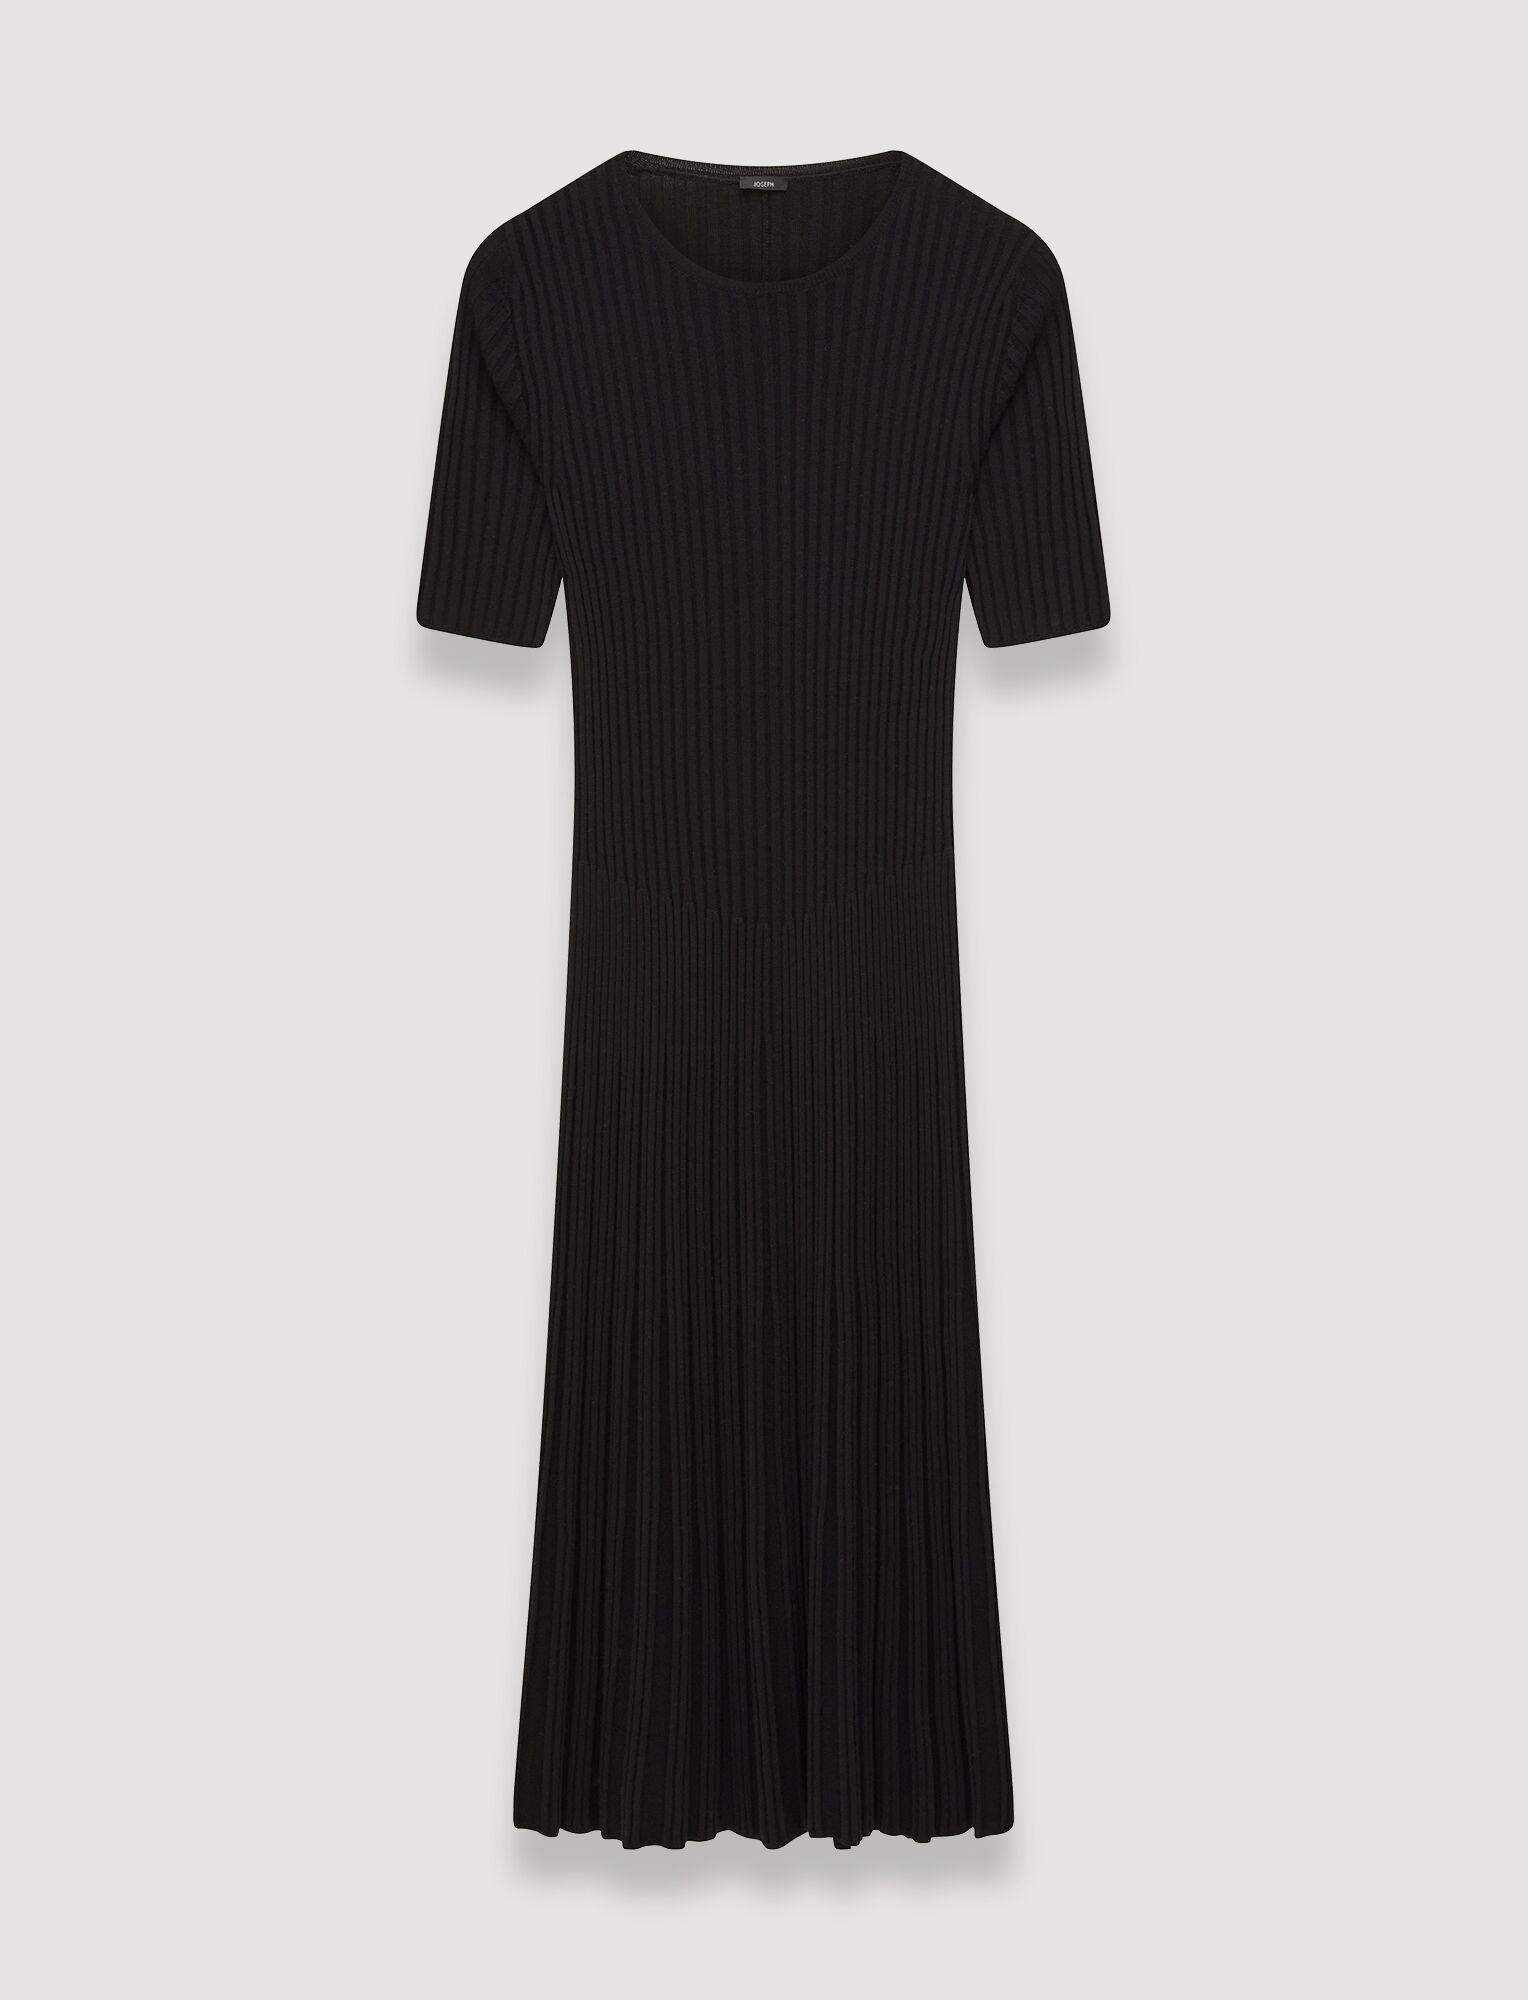 Joseph, Merino Rib Dress, in Black